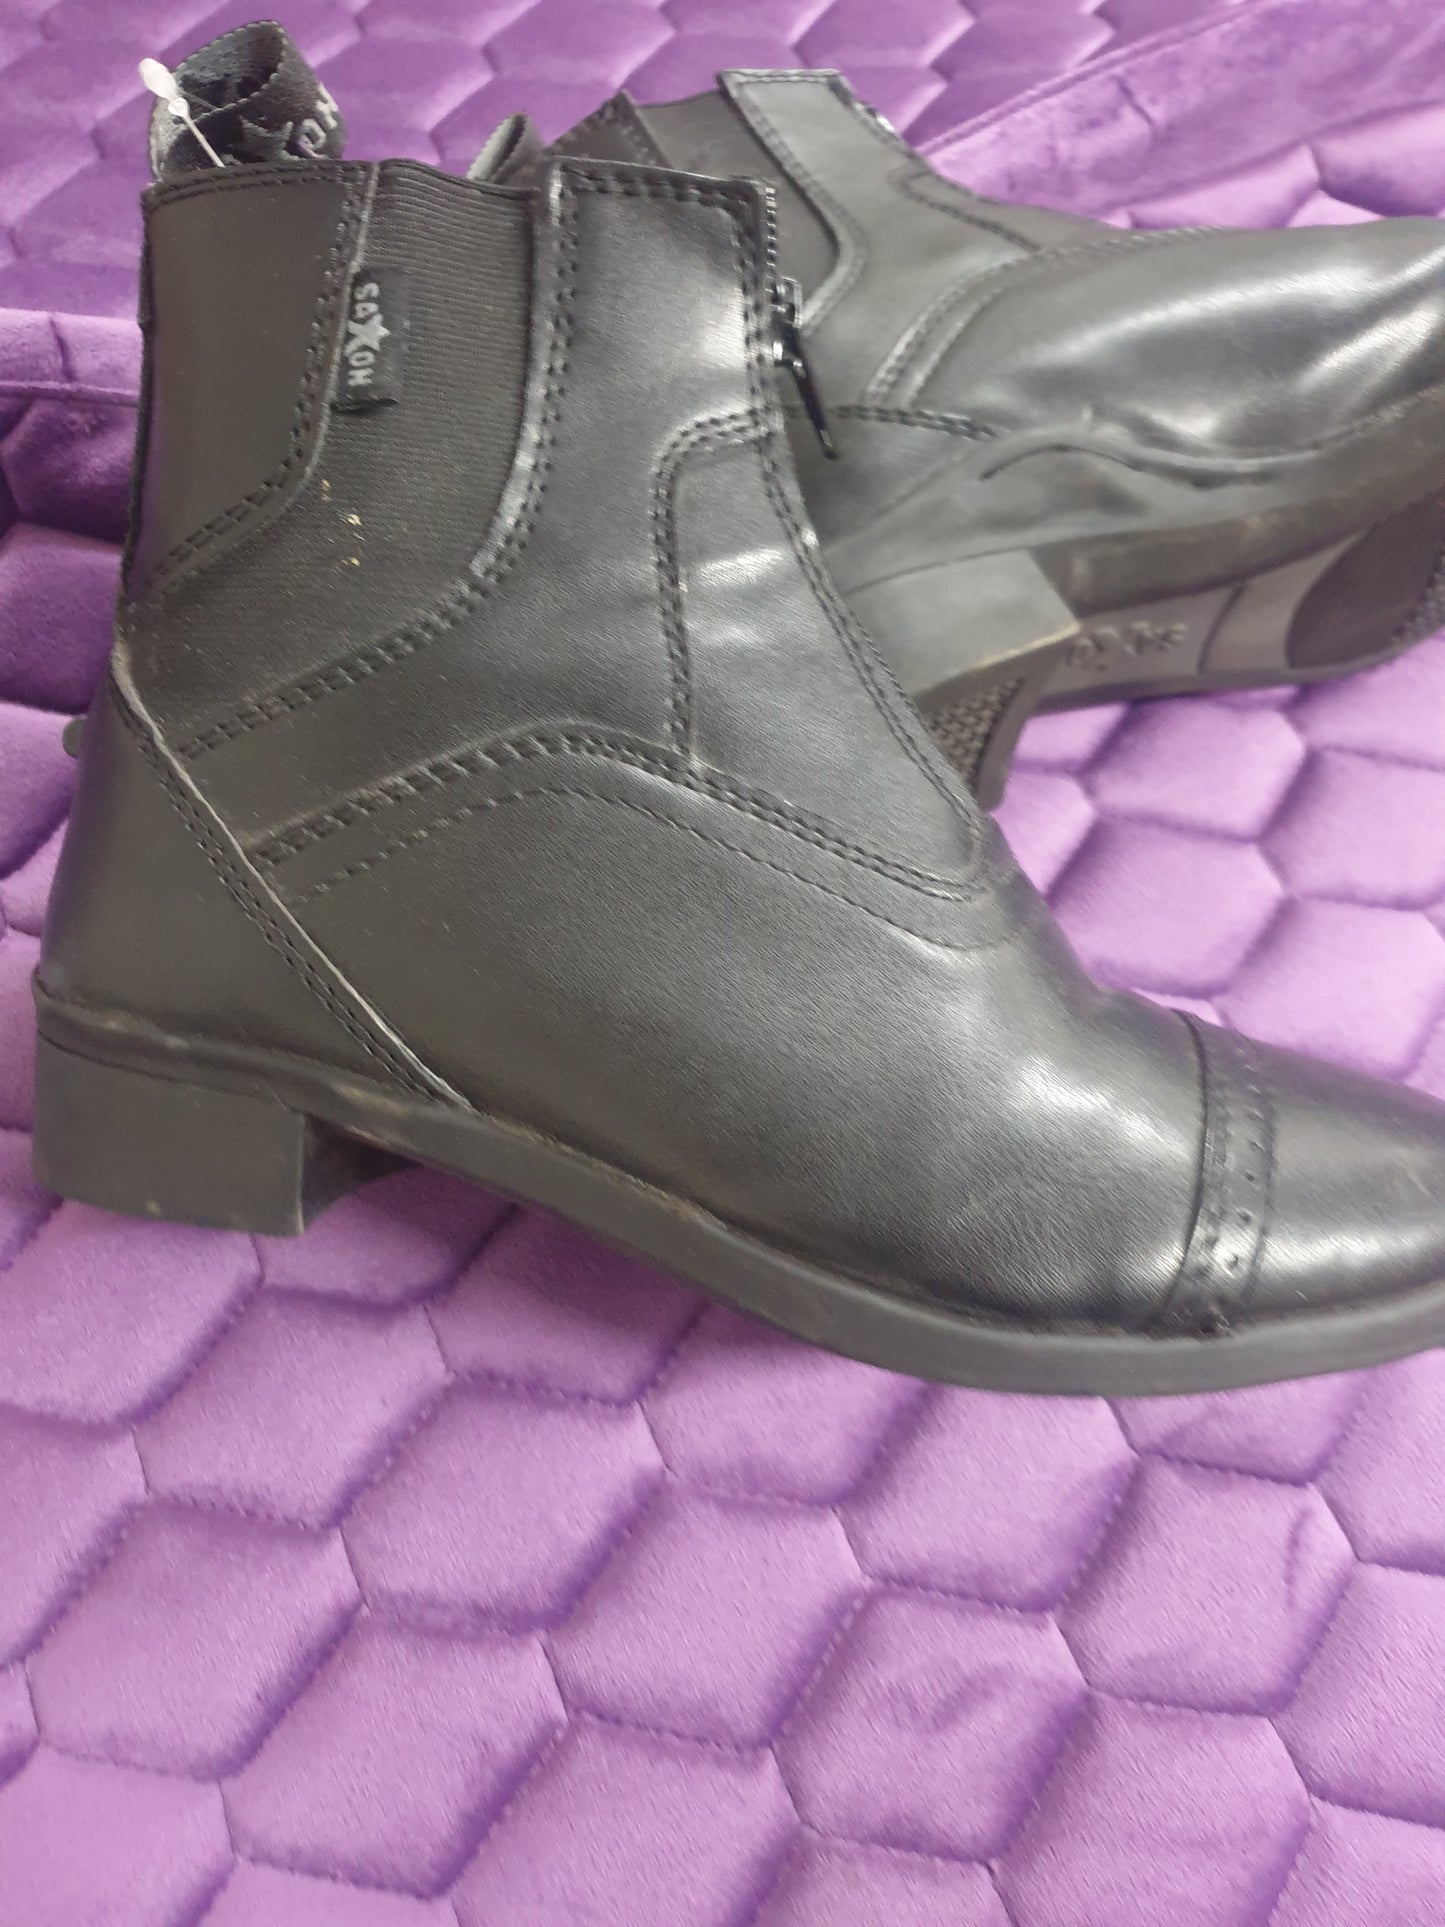 Saxon kids jodhpur boots black leather size 2 FREE POSTAGE 🟢